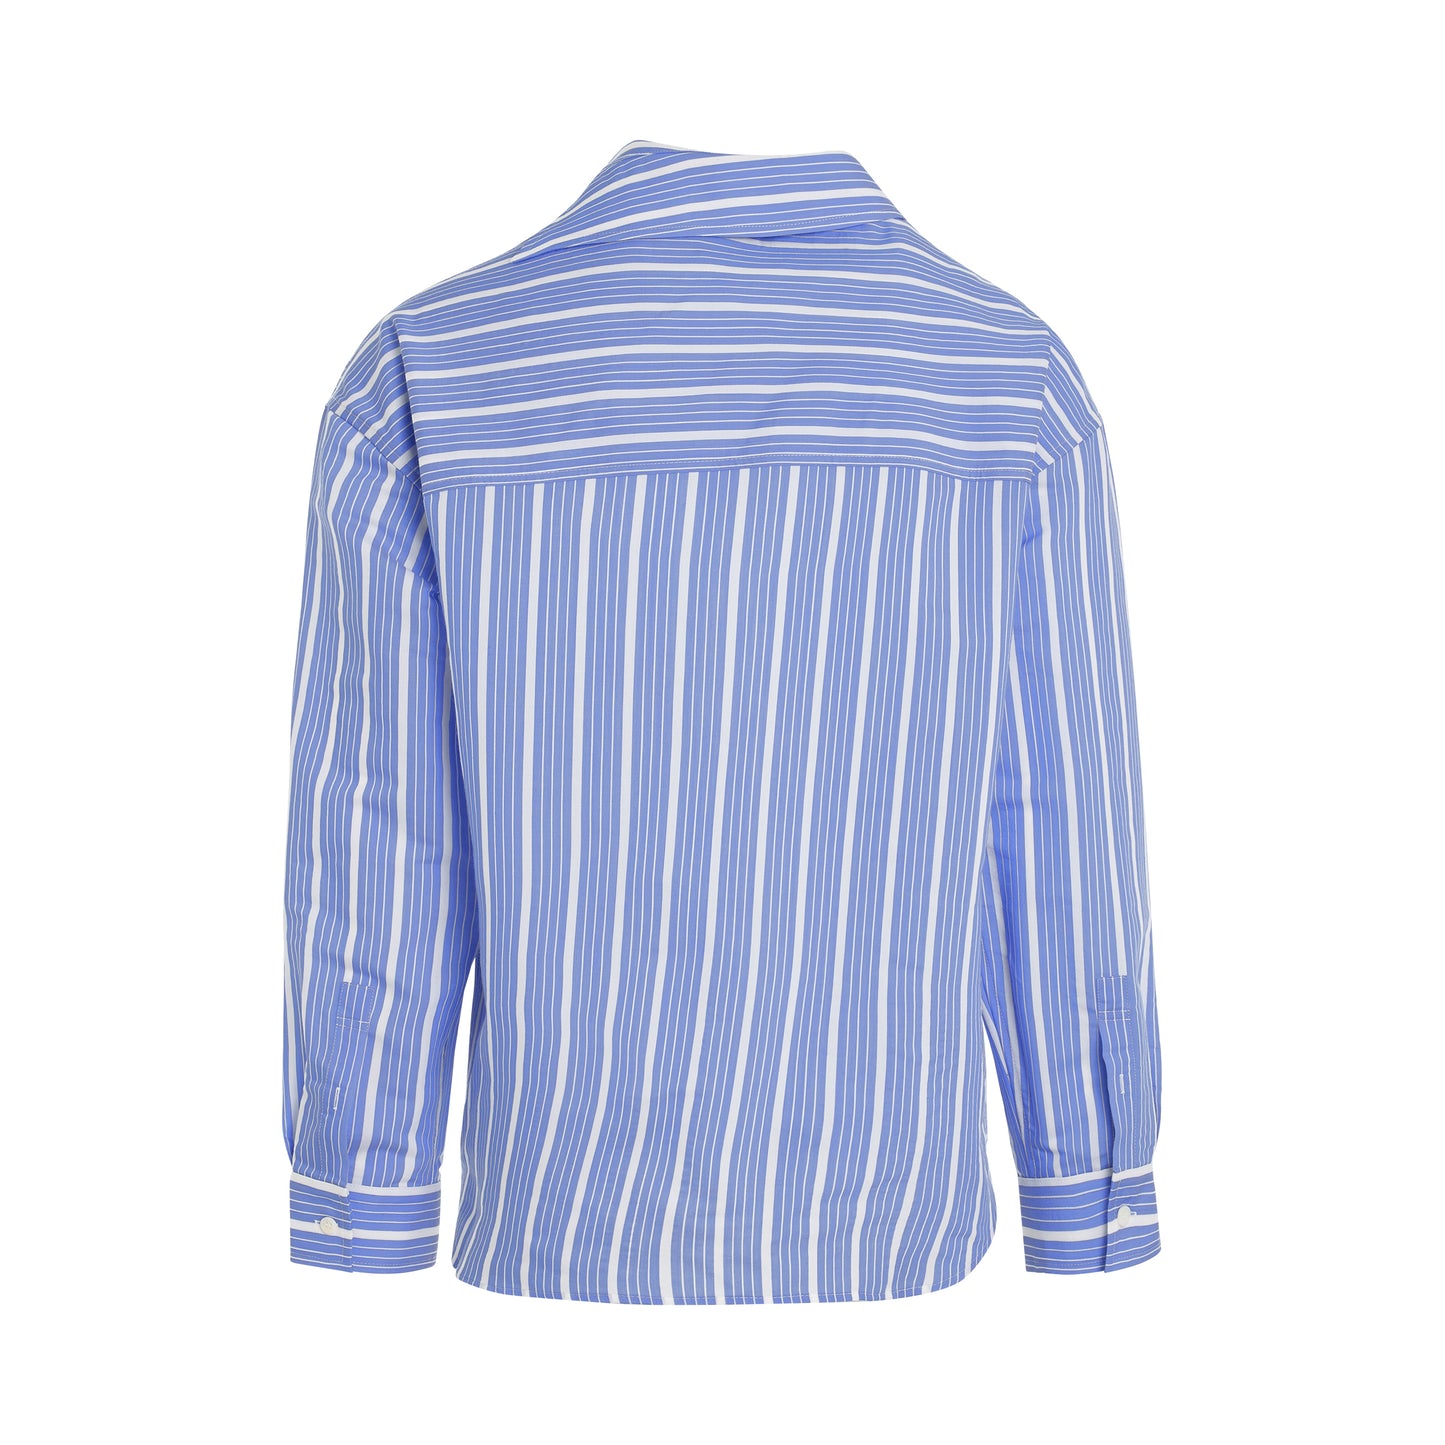 Cuadro Asymmetric Shirt in Blue Stripe